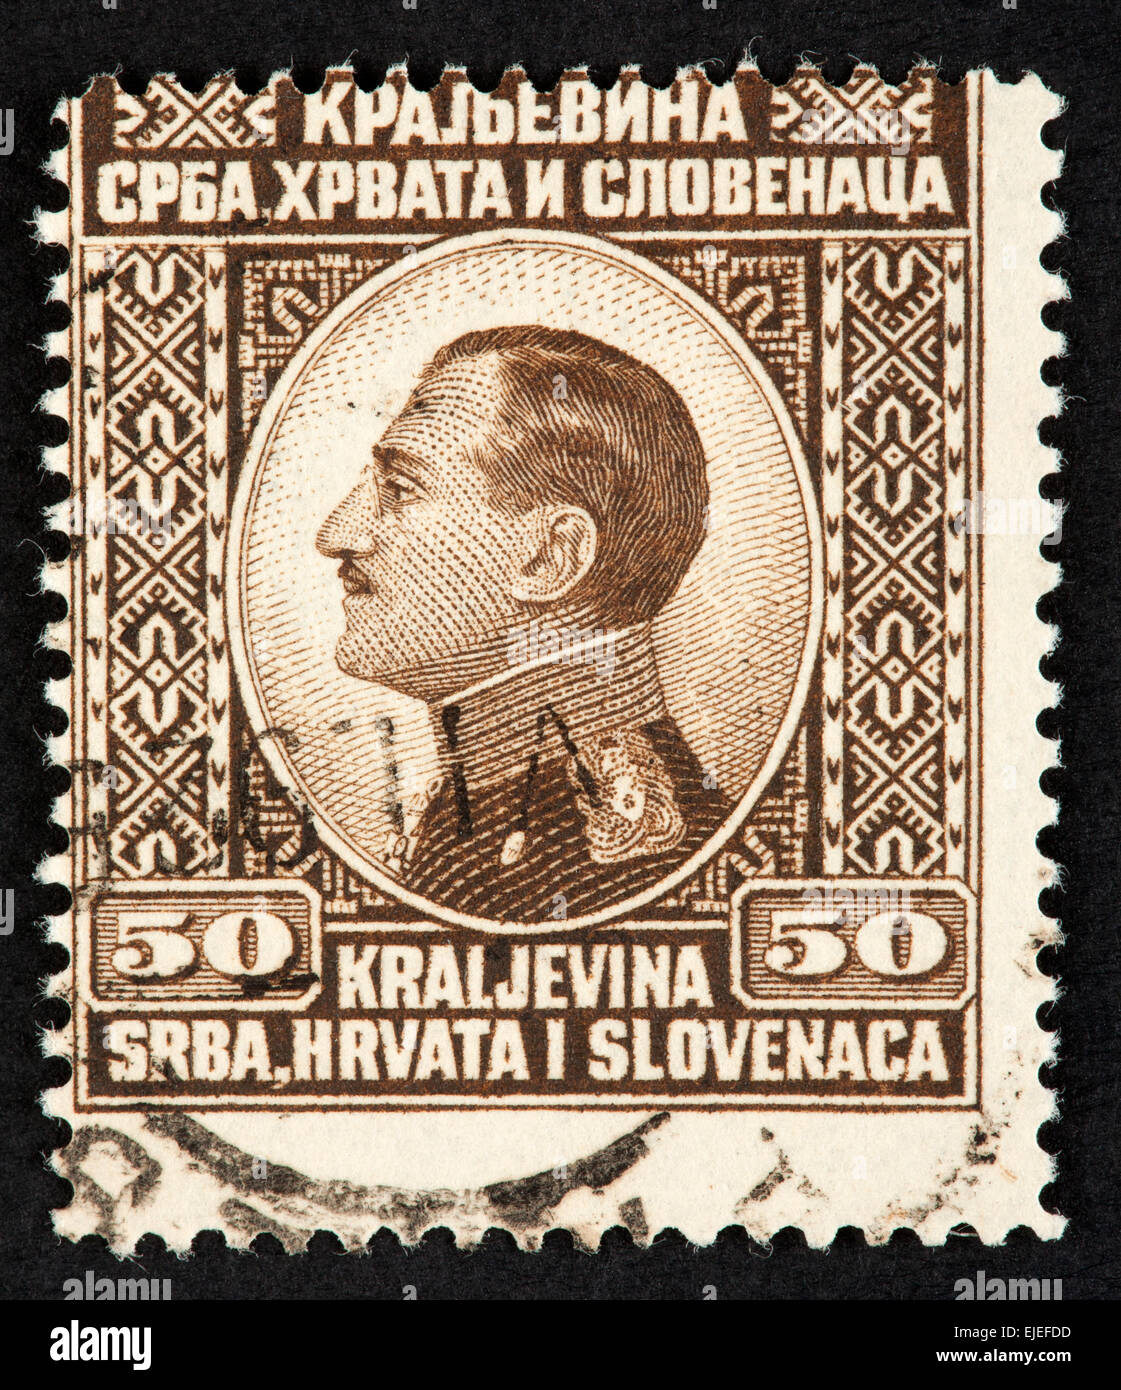 Serbo-Croatian postage stamp Stock Photo